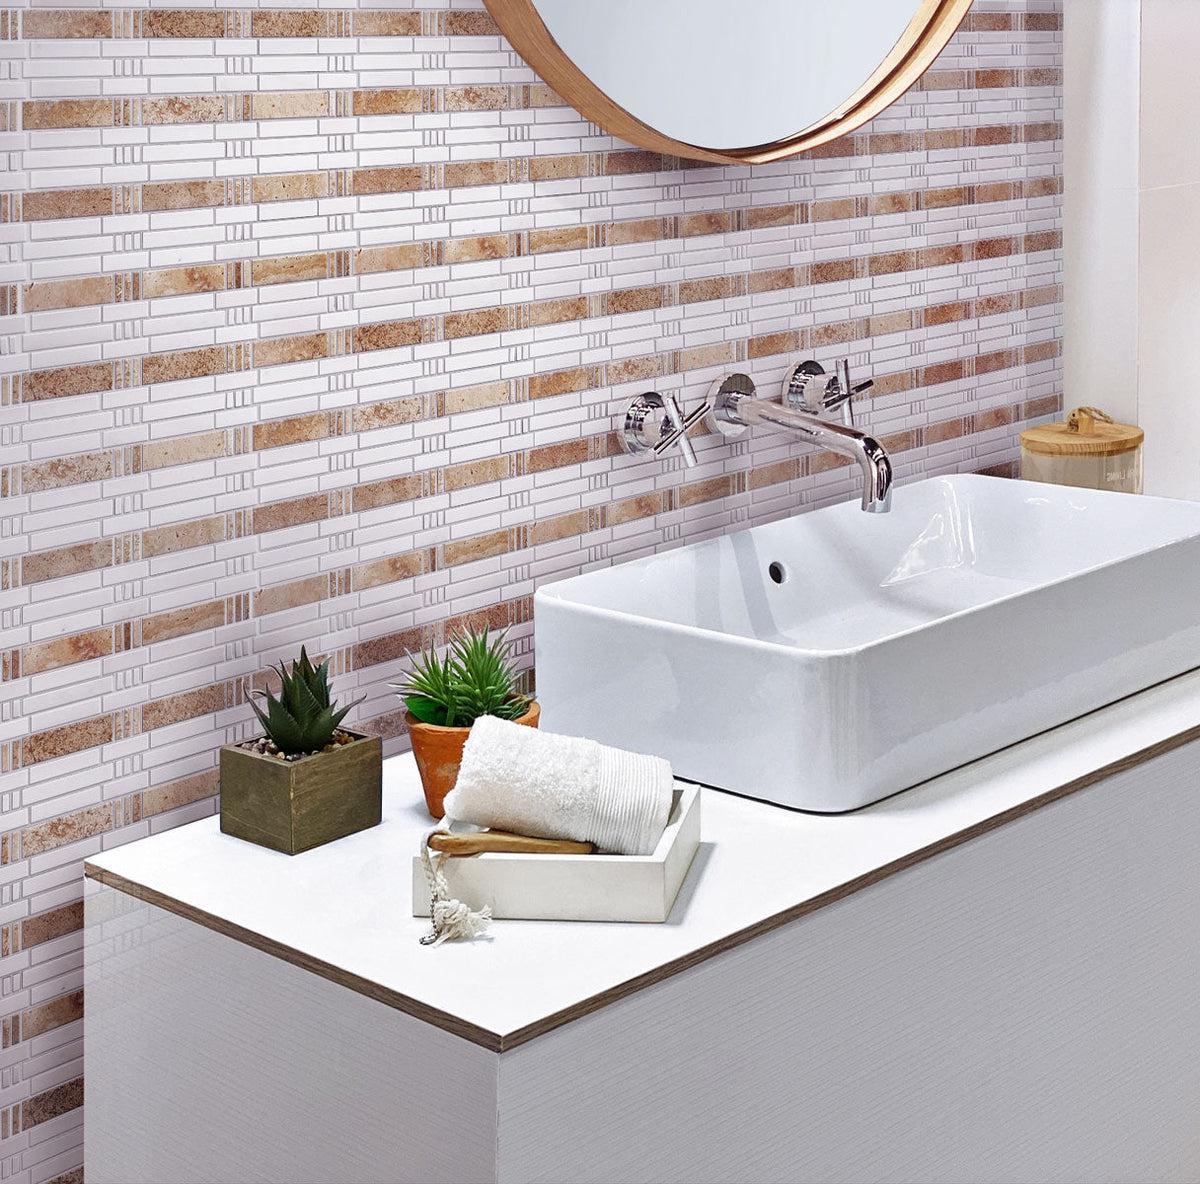 Bathroom wall tile with biophilic decor